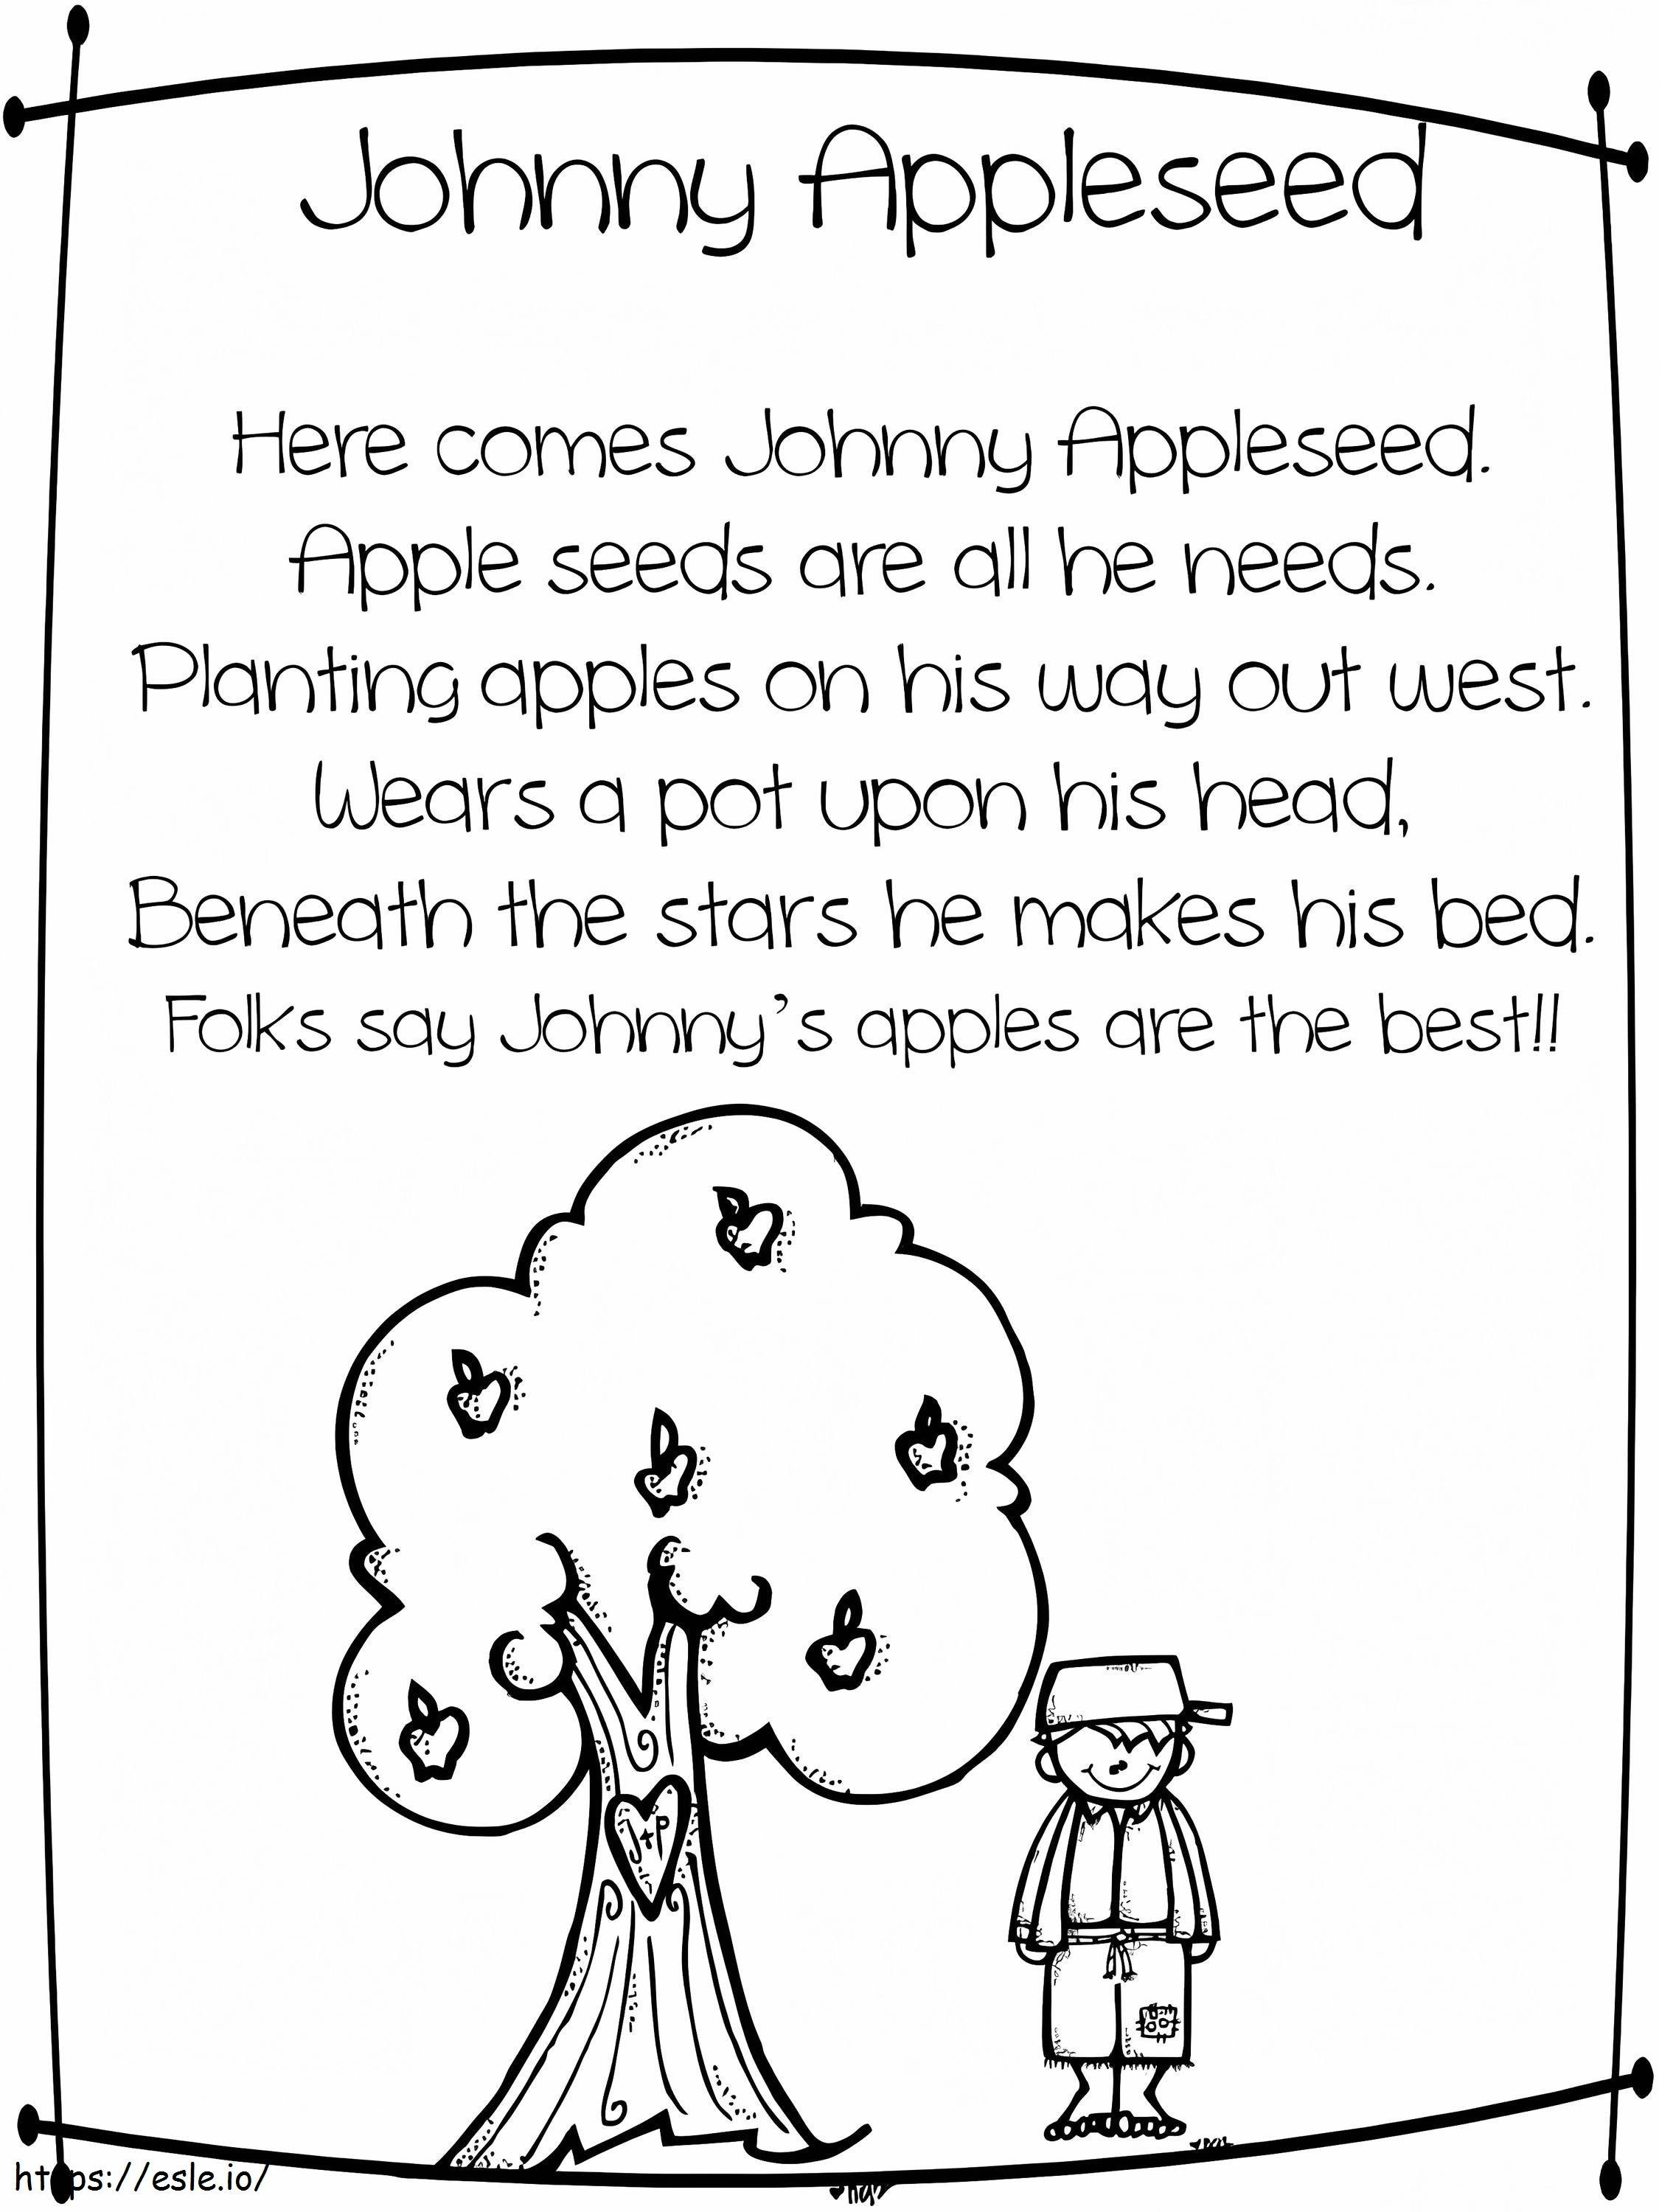 Johnny Appleseed 2 kolorowanka